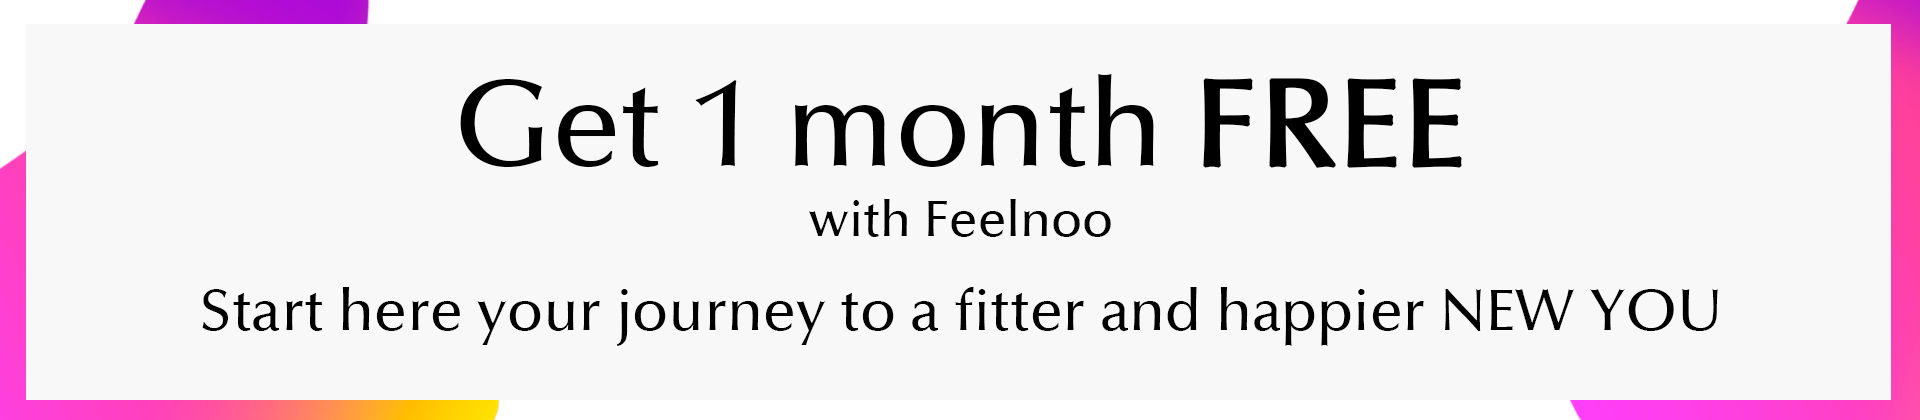 get 1 month free - feelnoo